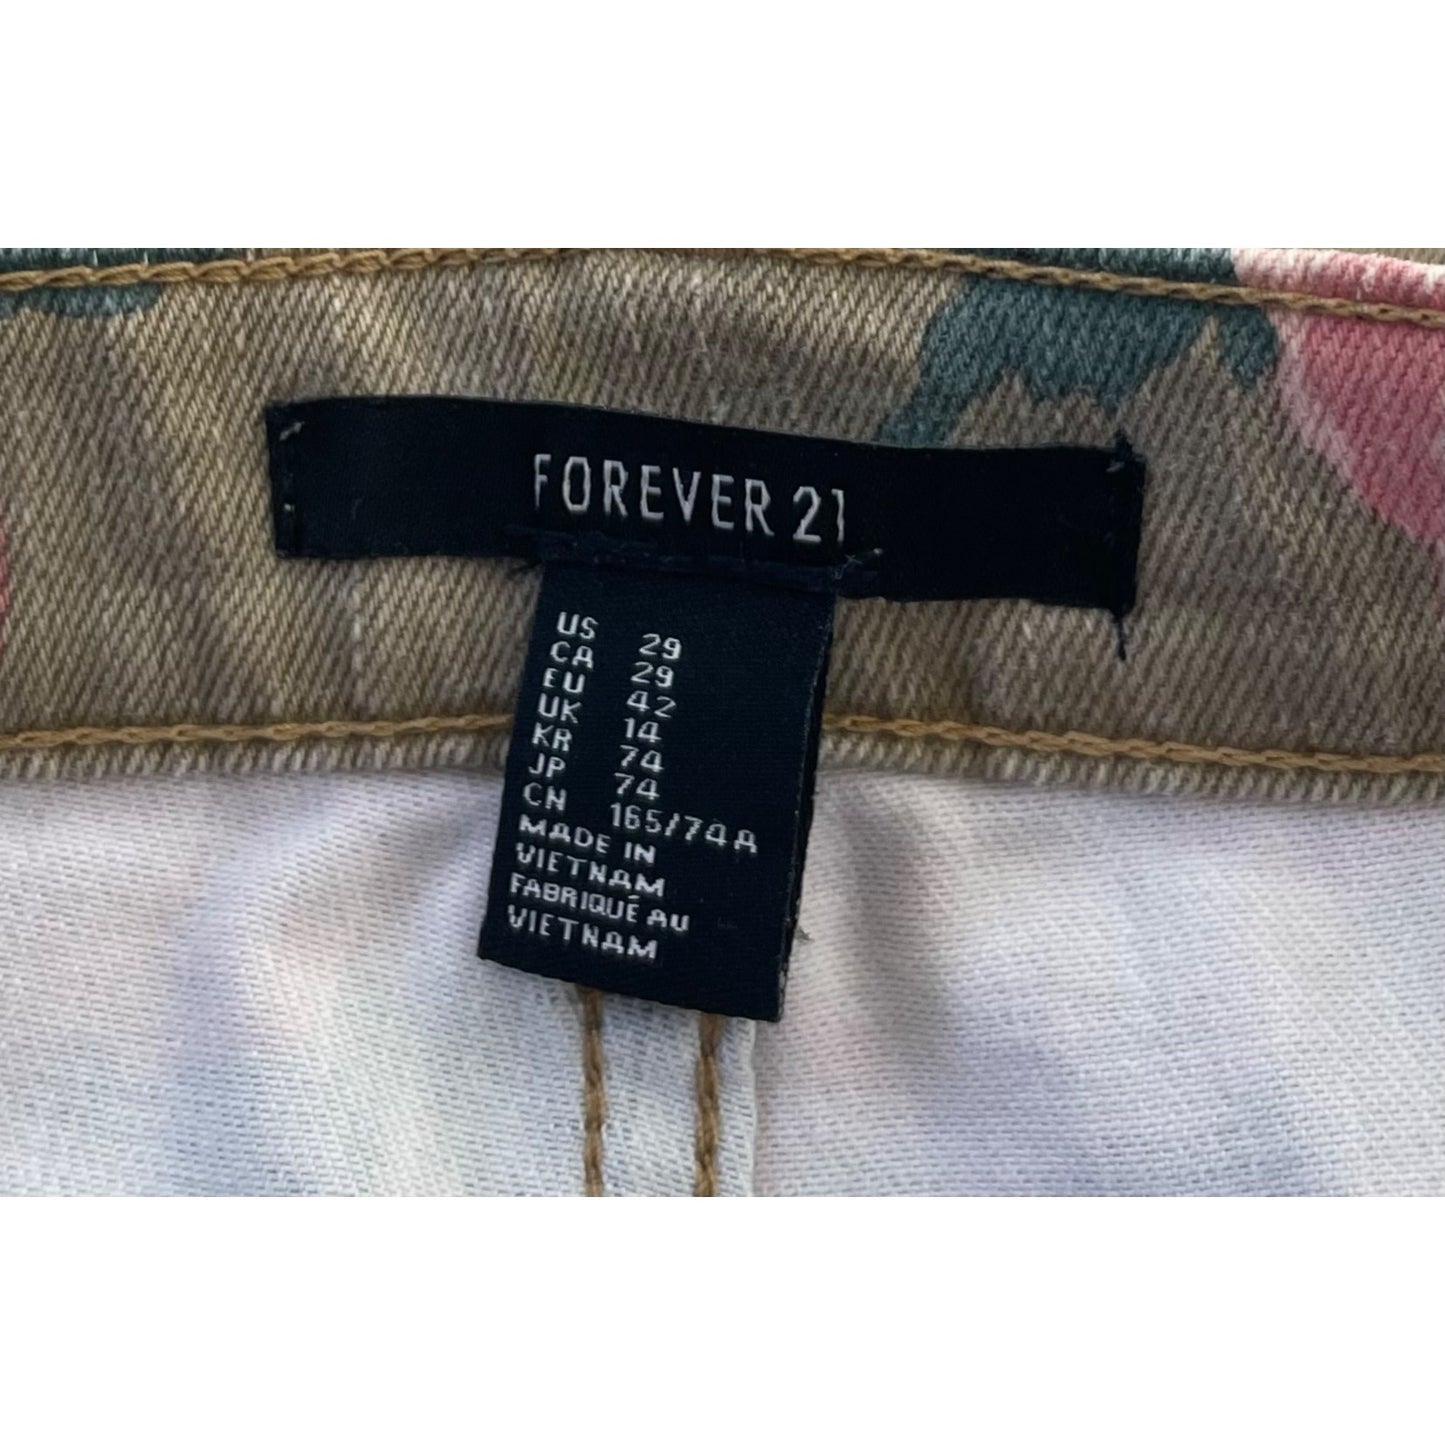 Forever 21 Women's Size 29 Olive & Mauve Floral Rose Print Skinny Jean Pants